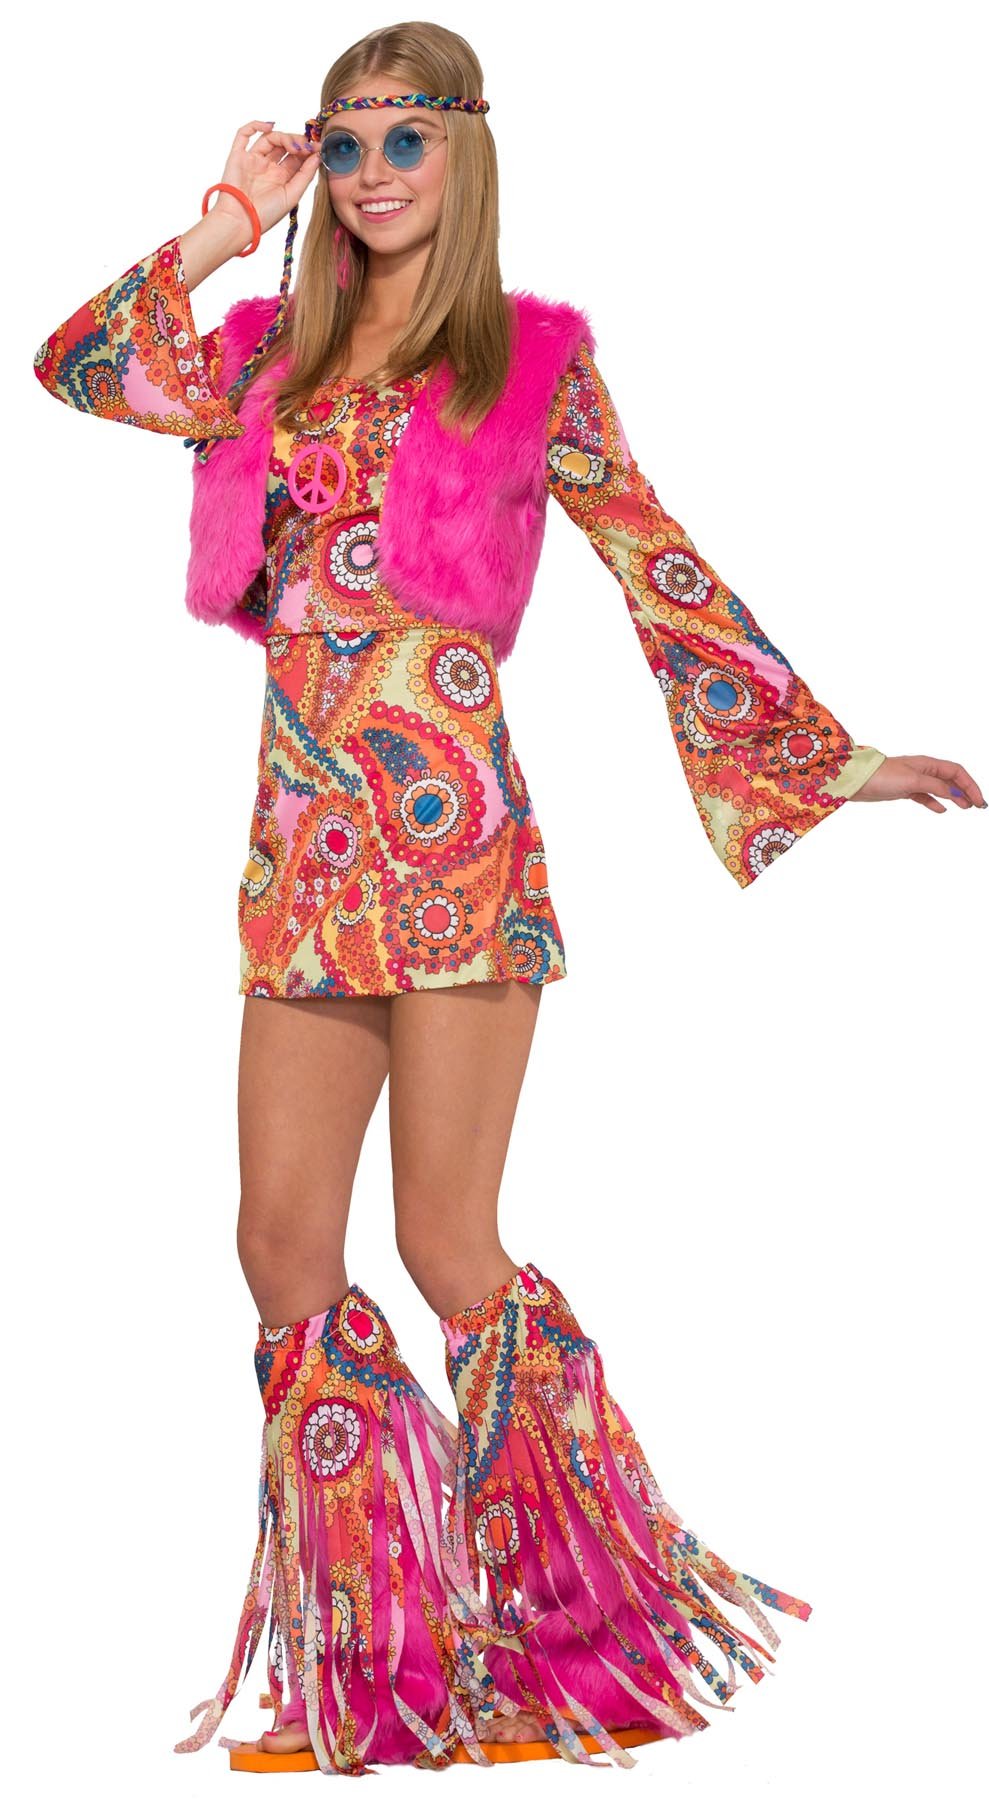 Pink fur vest, hippie dress and fur fringe boot covers